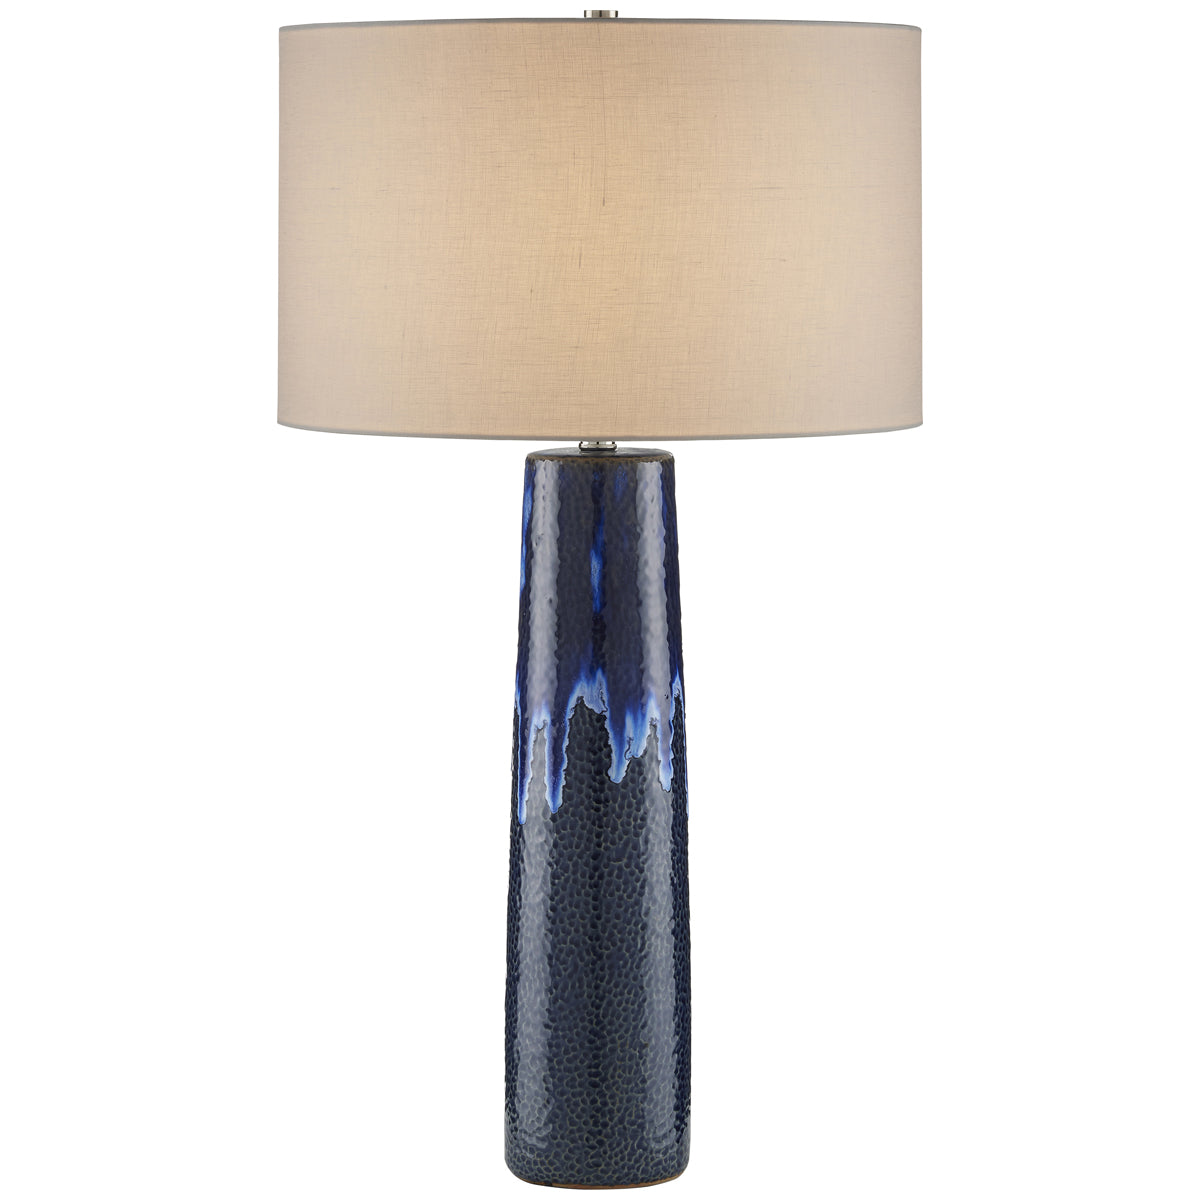 Currey and Company Kelmscott Blue Table Lamp